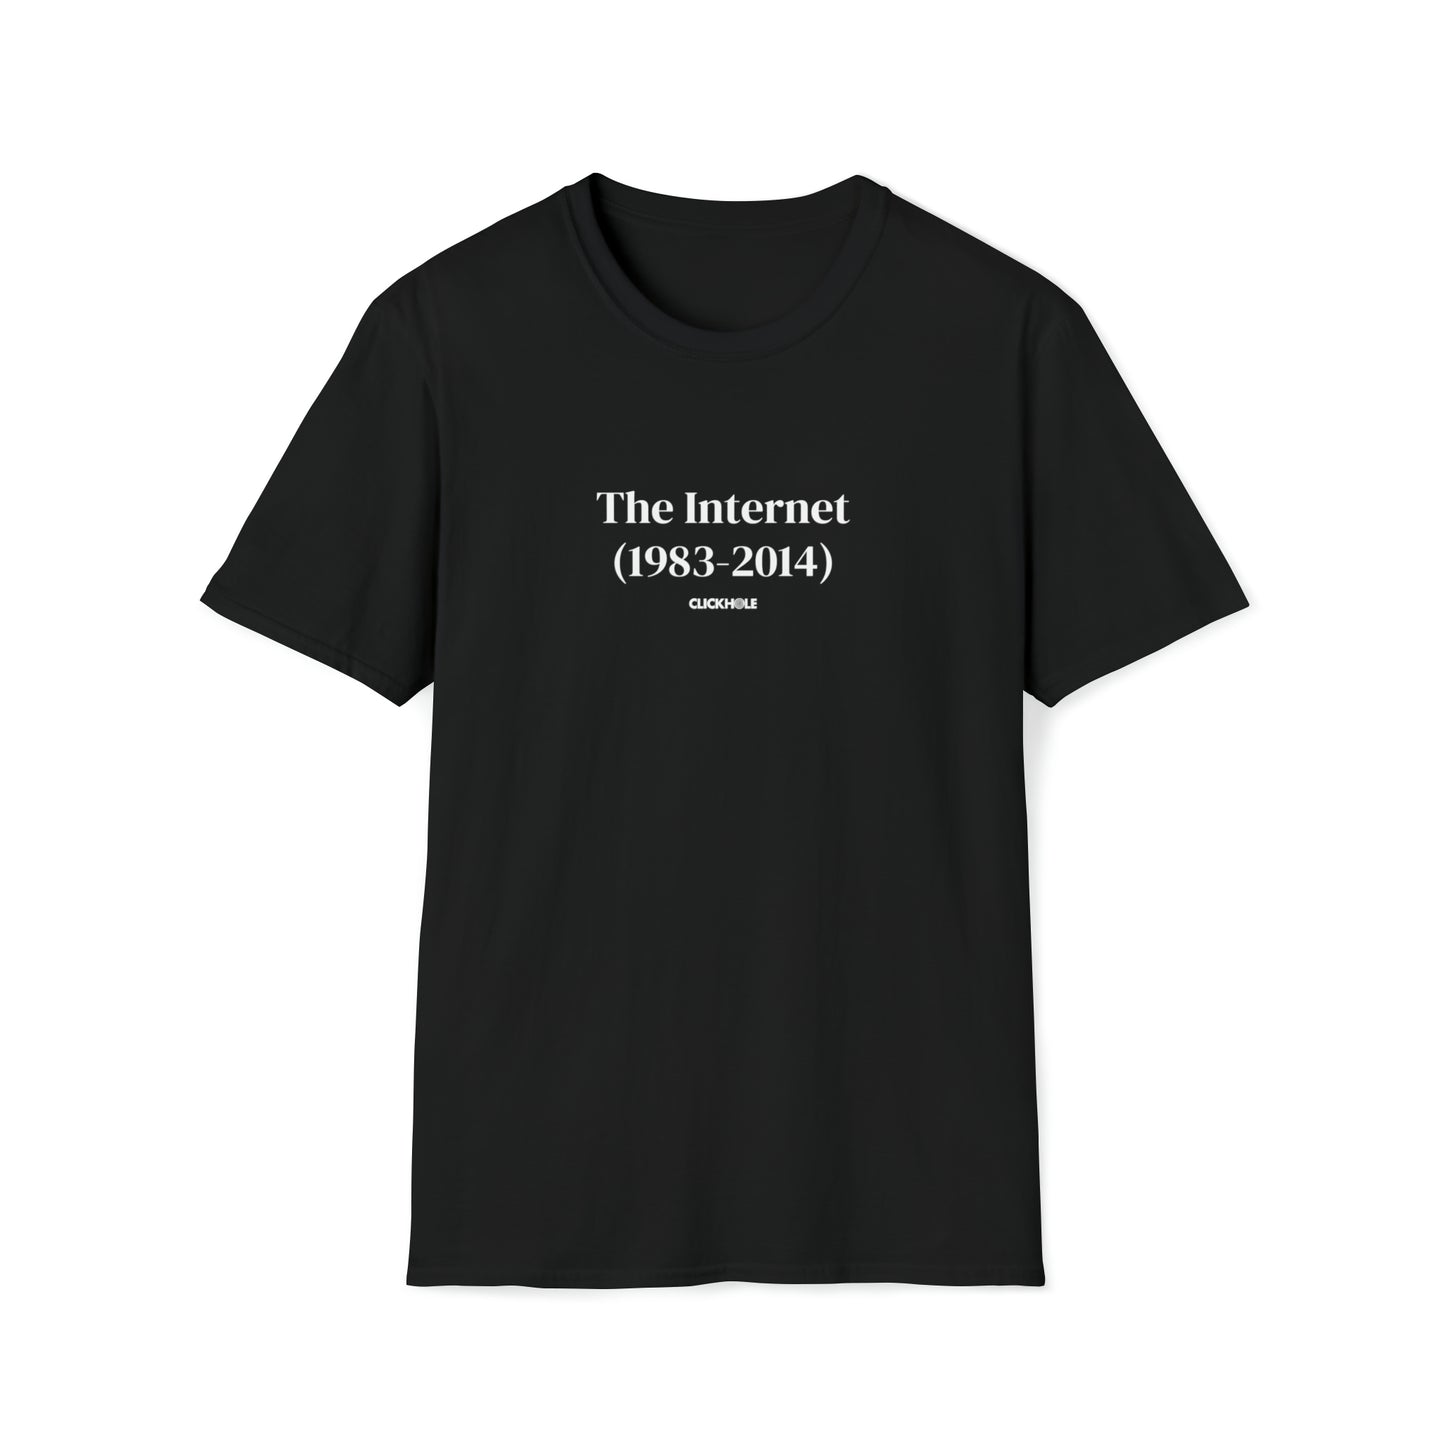 "The Internet (1983-2014)" Shirt